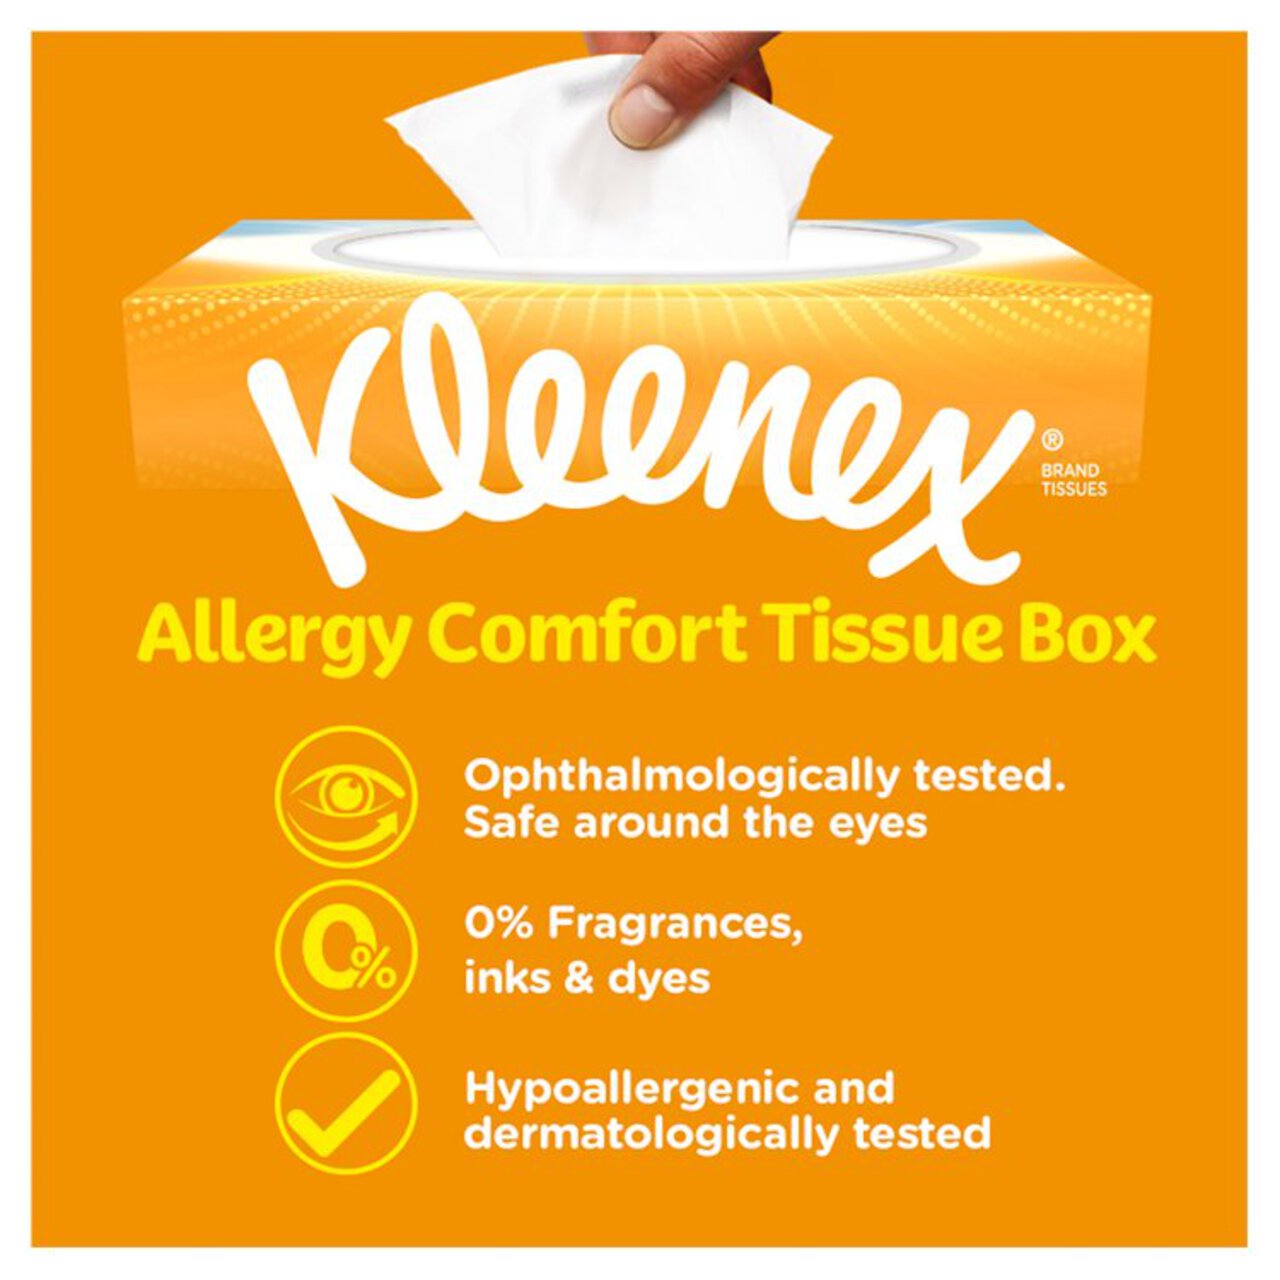 Kleenex Hayfever Allergy Comfort Facial Tissues - Twin Box 2 per pack